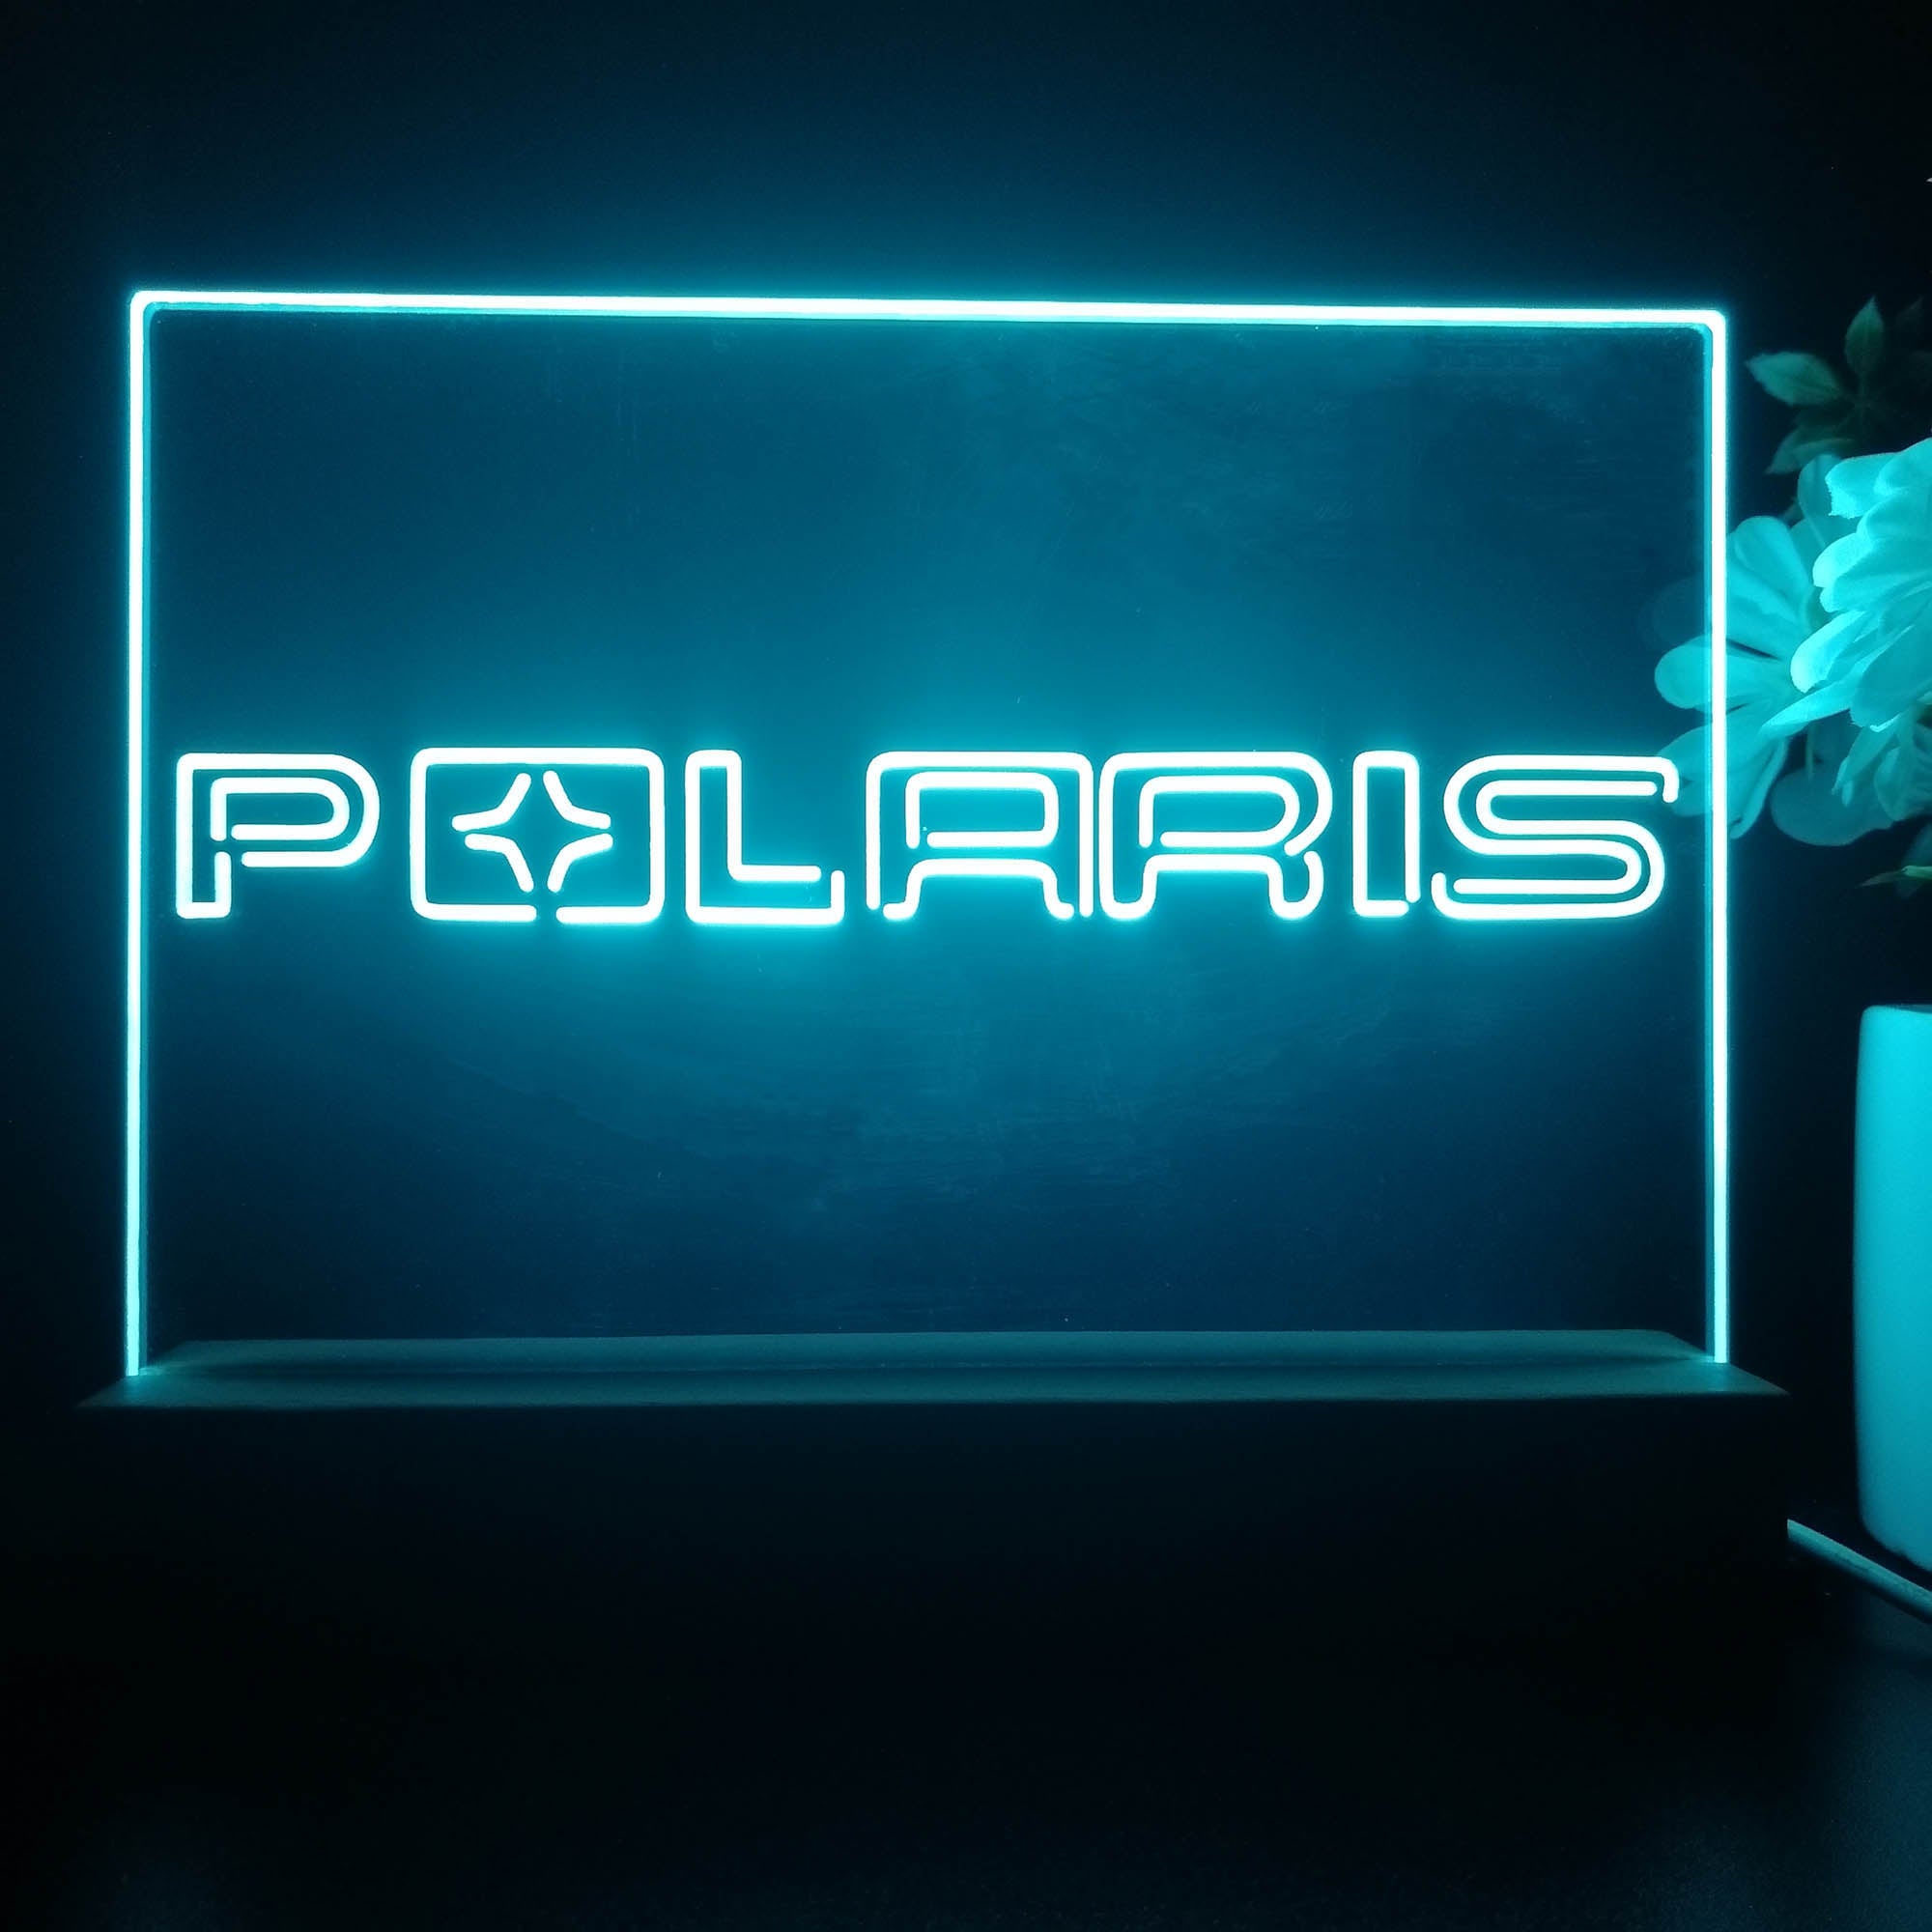 Polaris Snowmobile 3D Illusion Night Light Desk Lamp